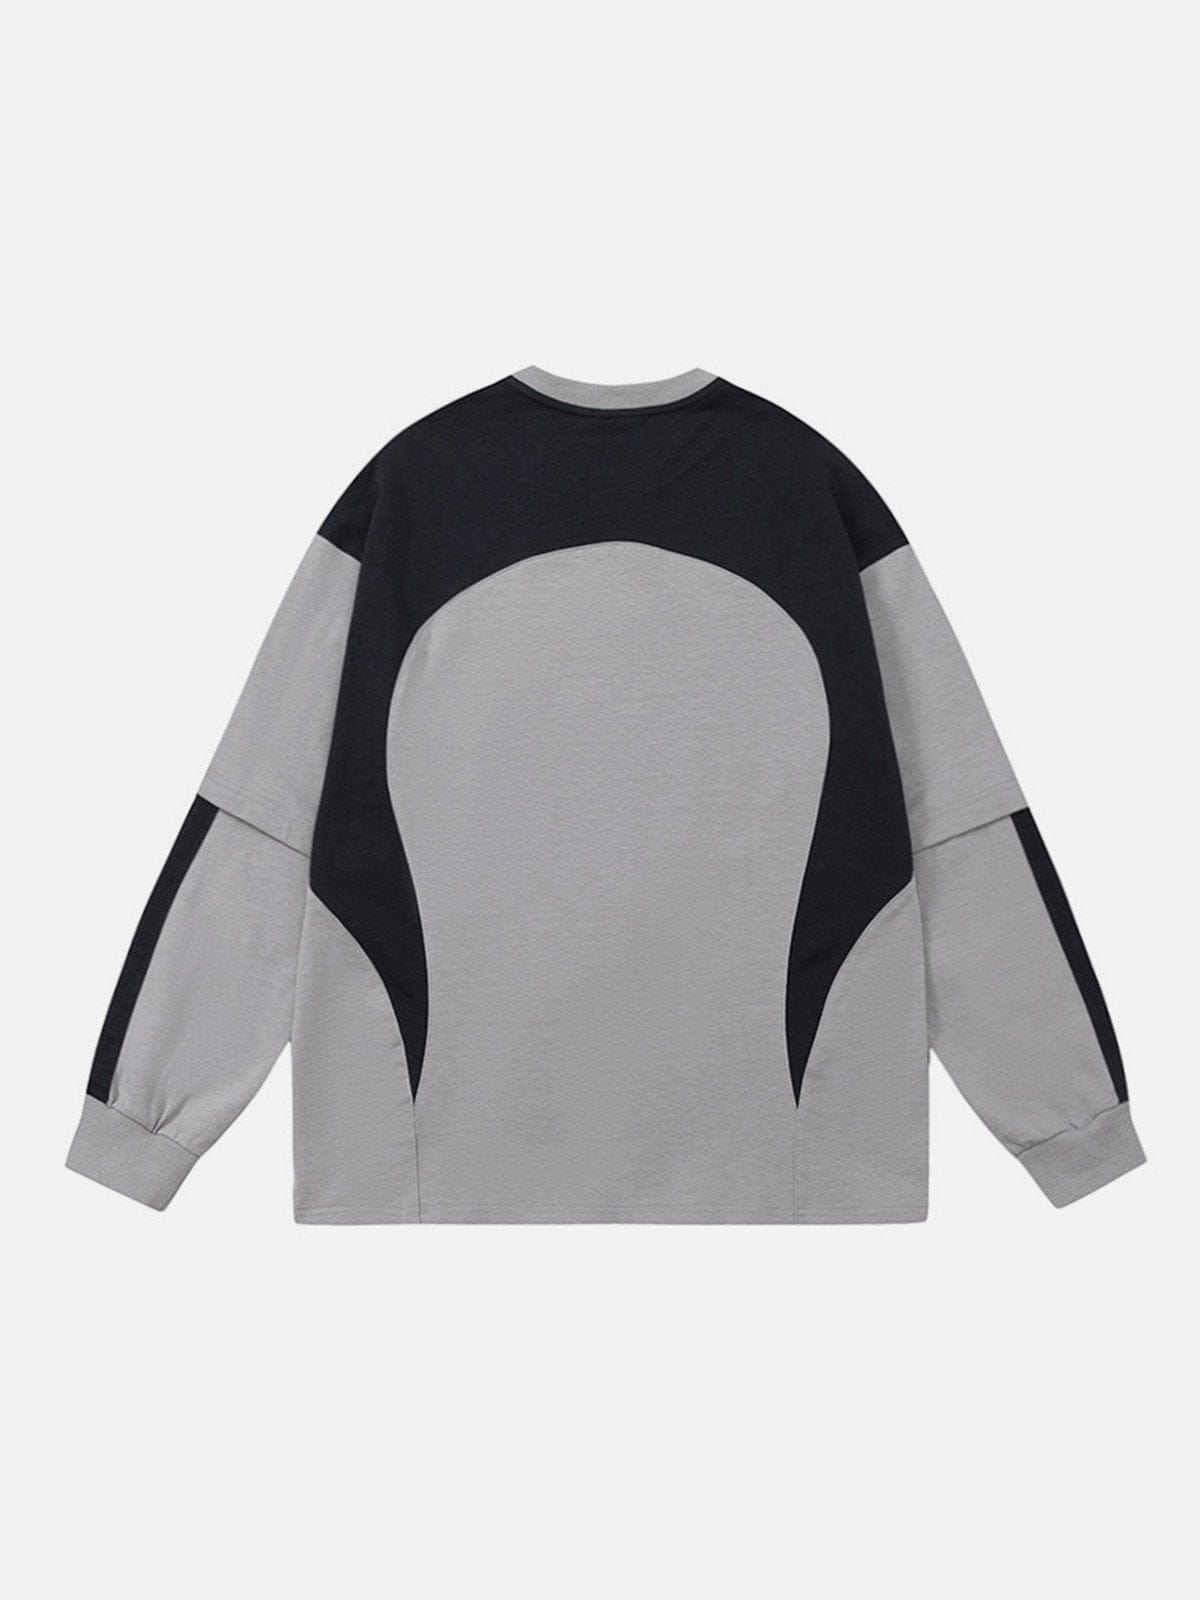 NEV Sleeve Patchwork Design Sweatshirt